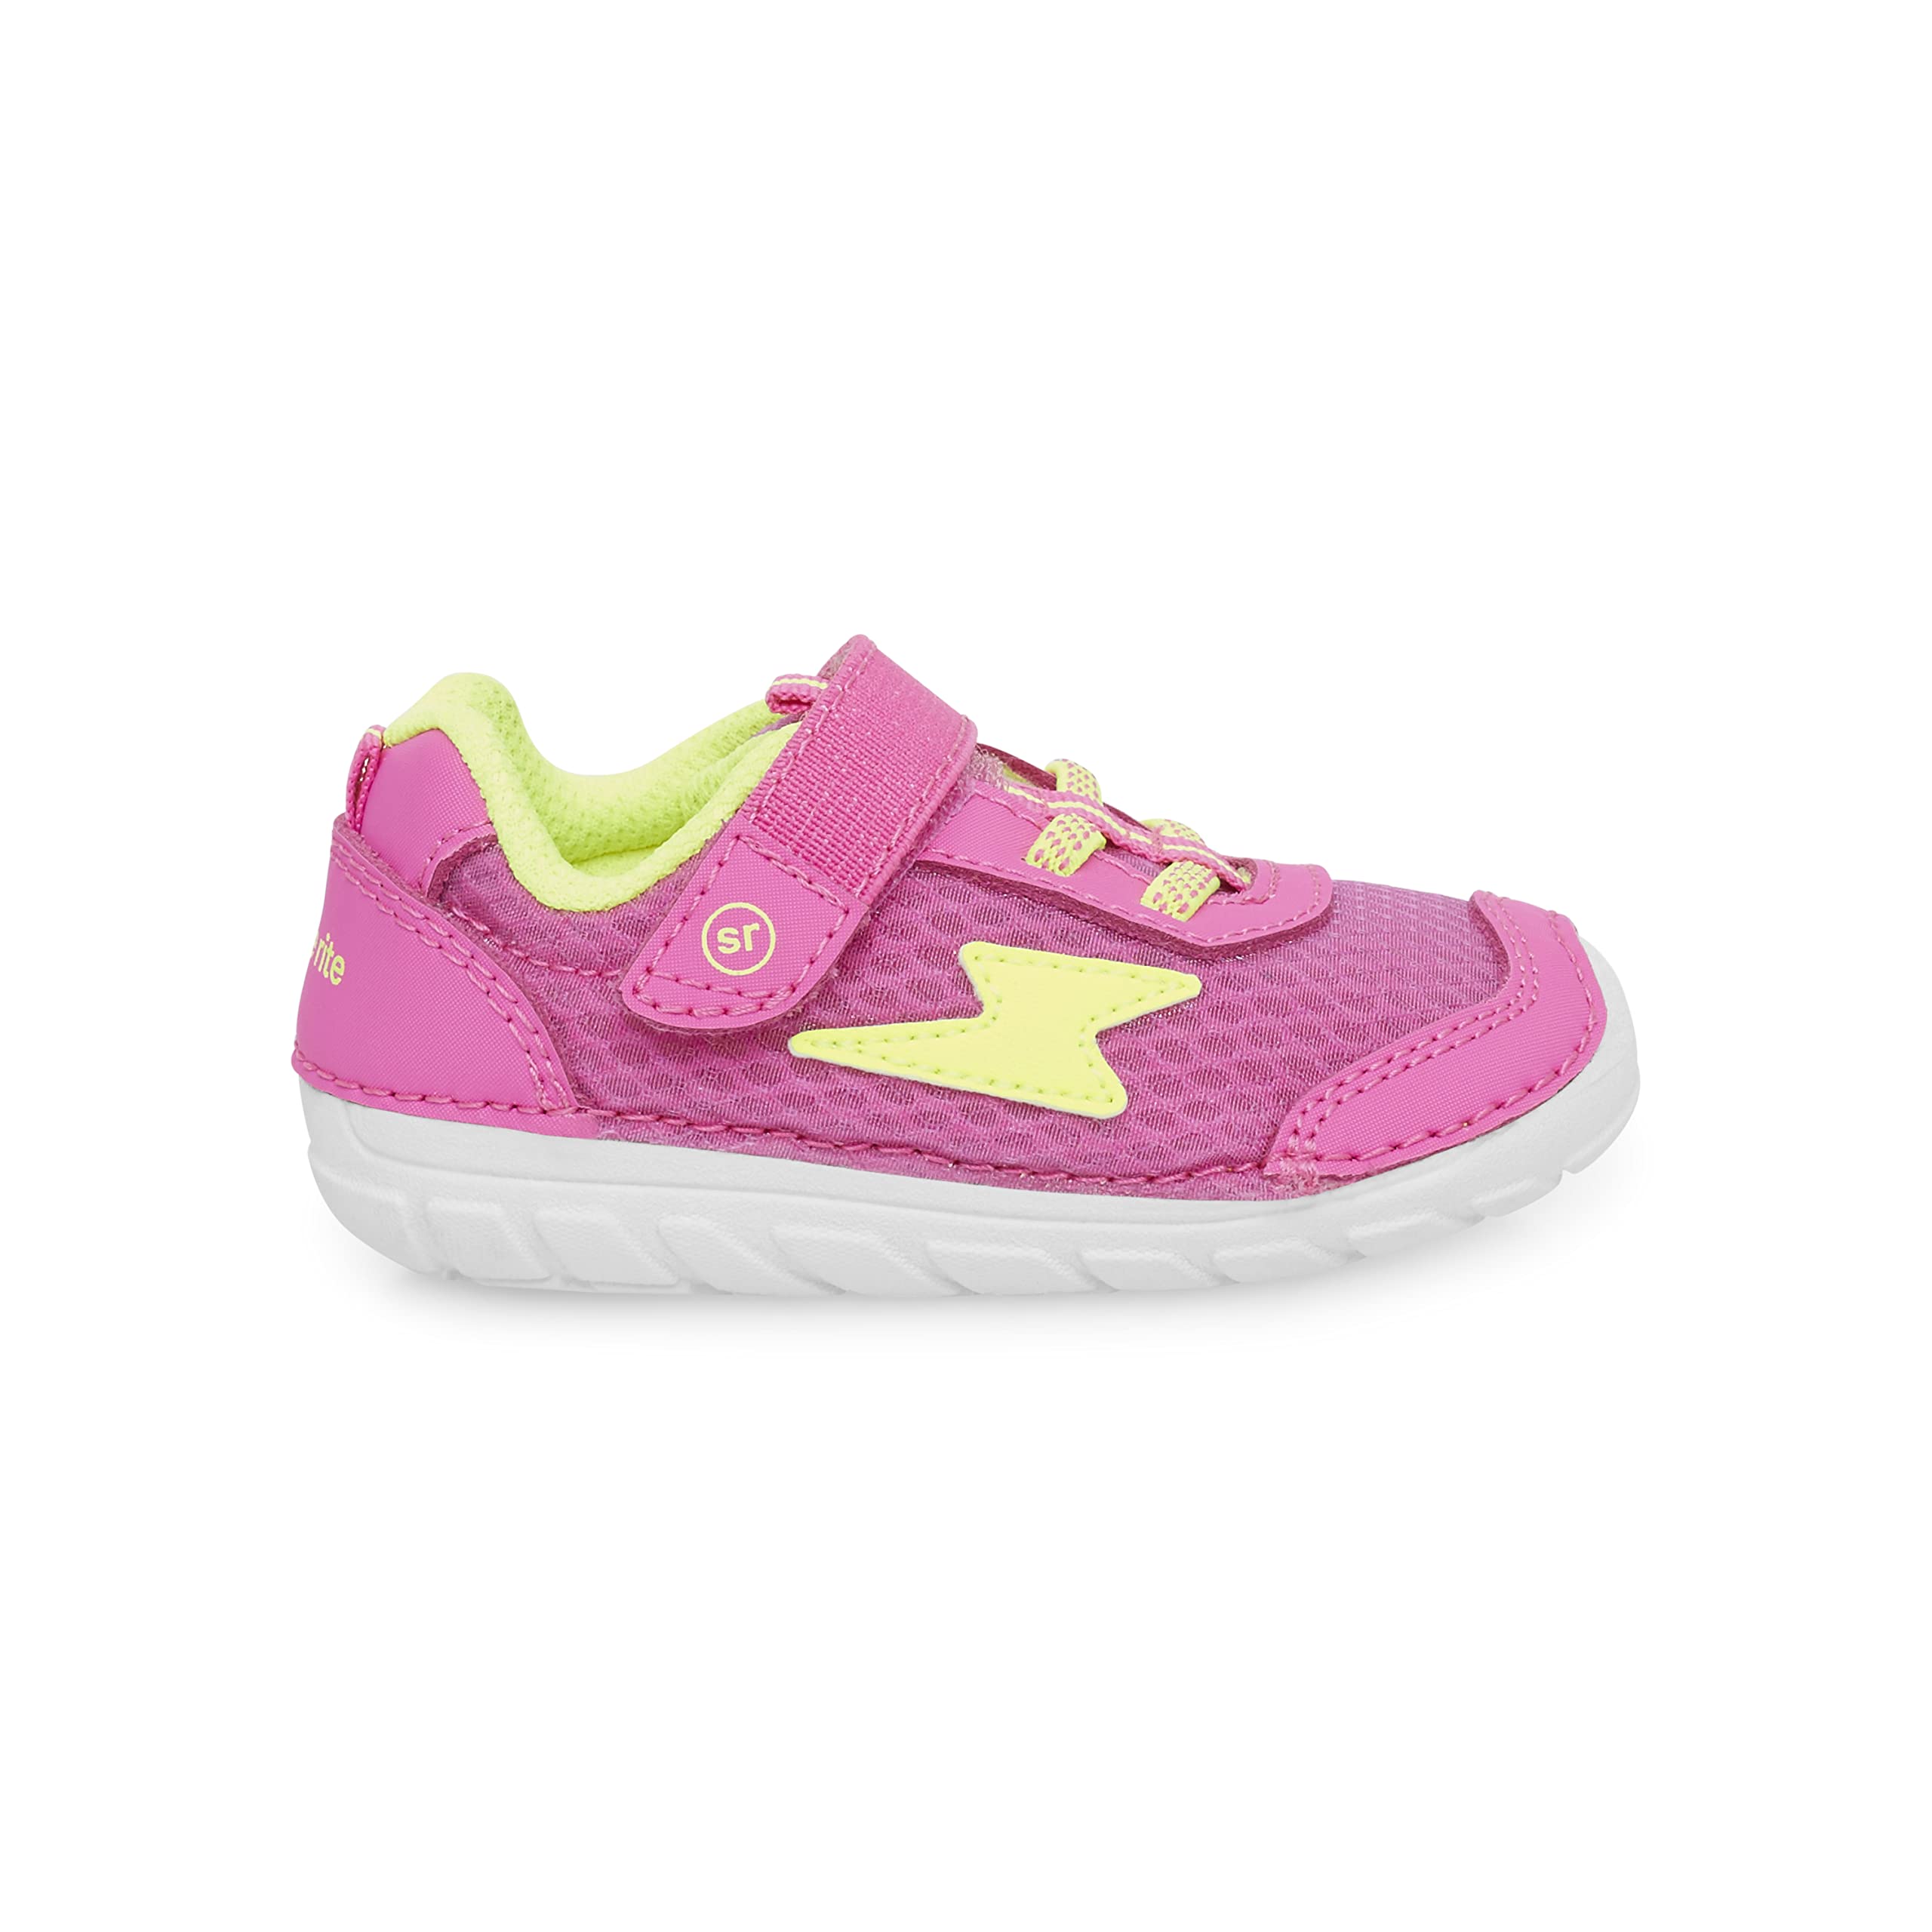 Stride Rite Baby Soft Motion Zips Runner Sneaker, Hot Pink, 5 Wide US Unisex Infant